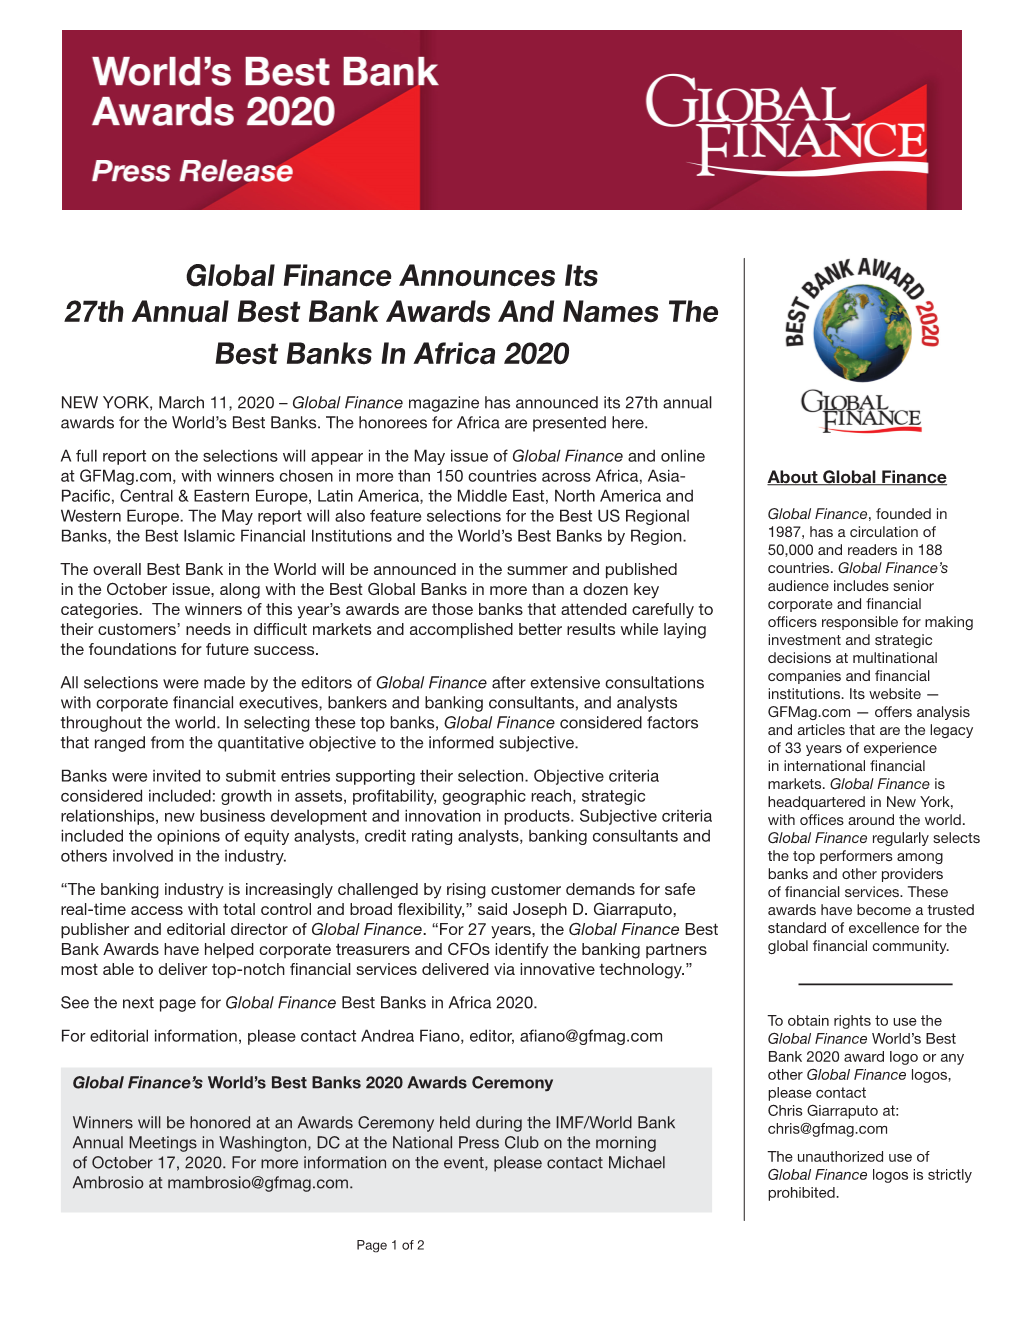 World's Best Banks 2020